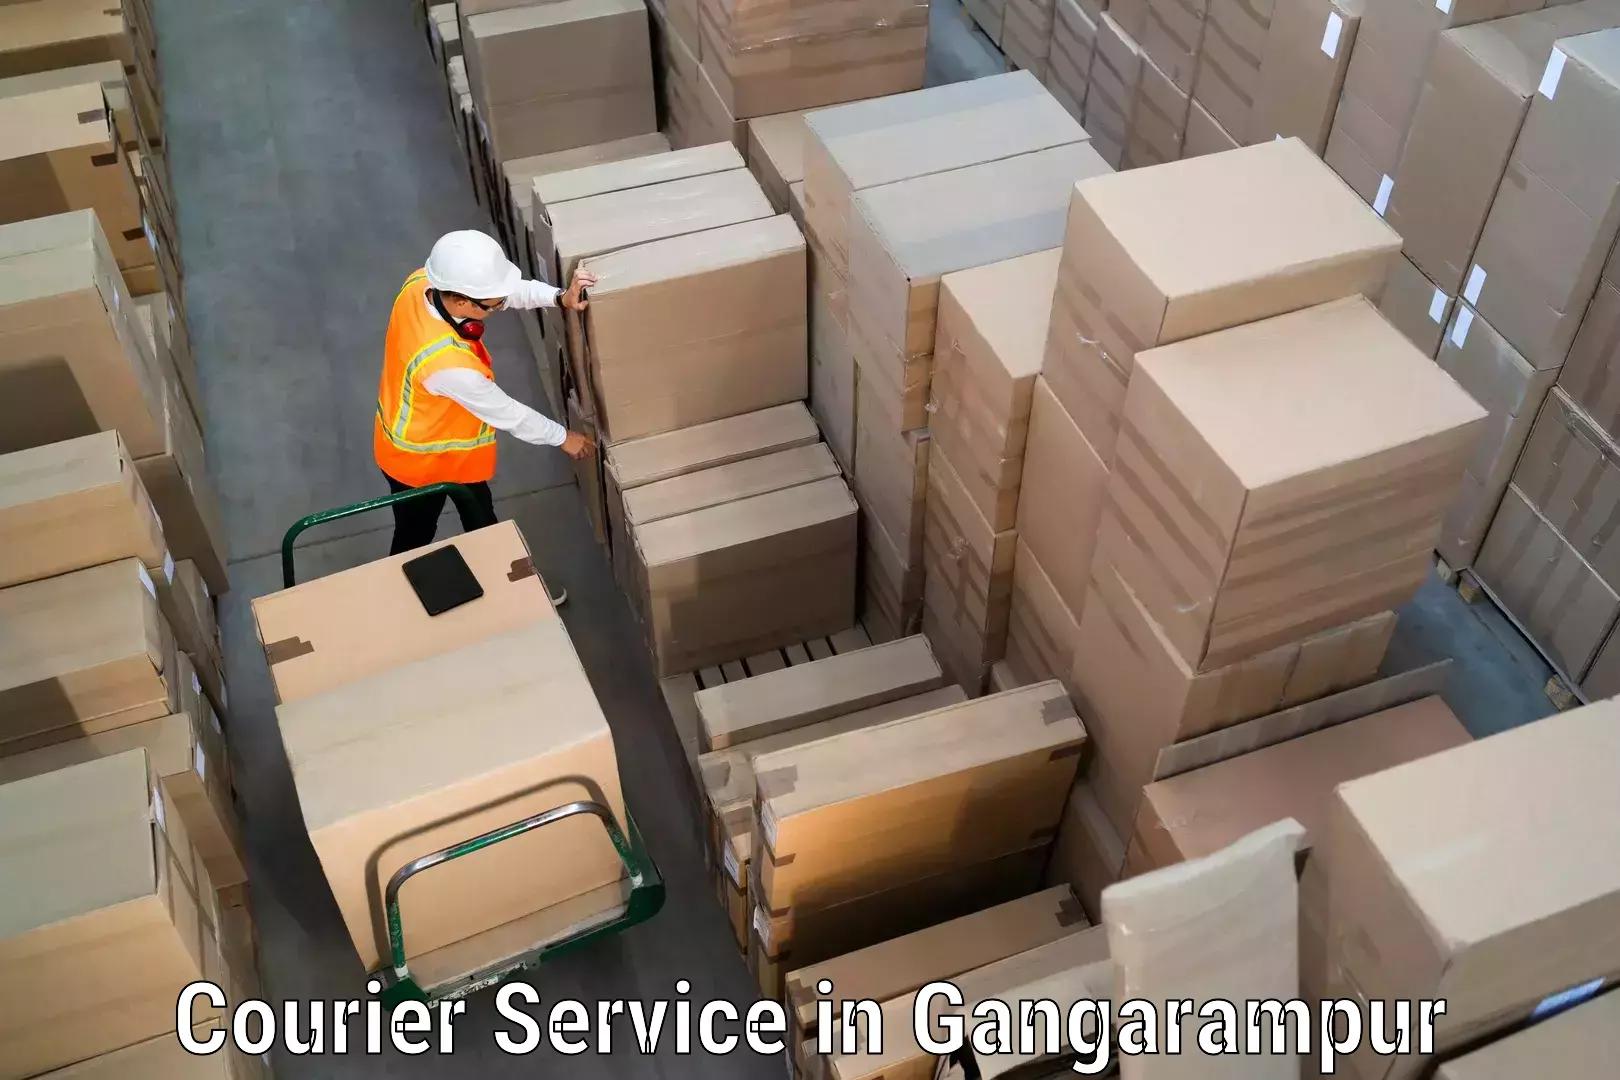 High-capacity parcel service in Gangarampur